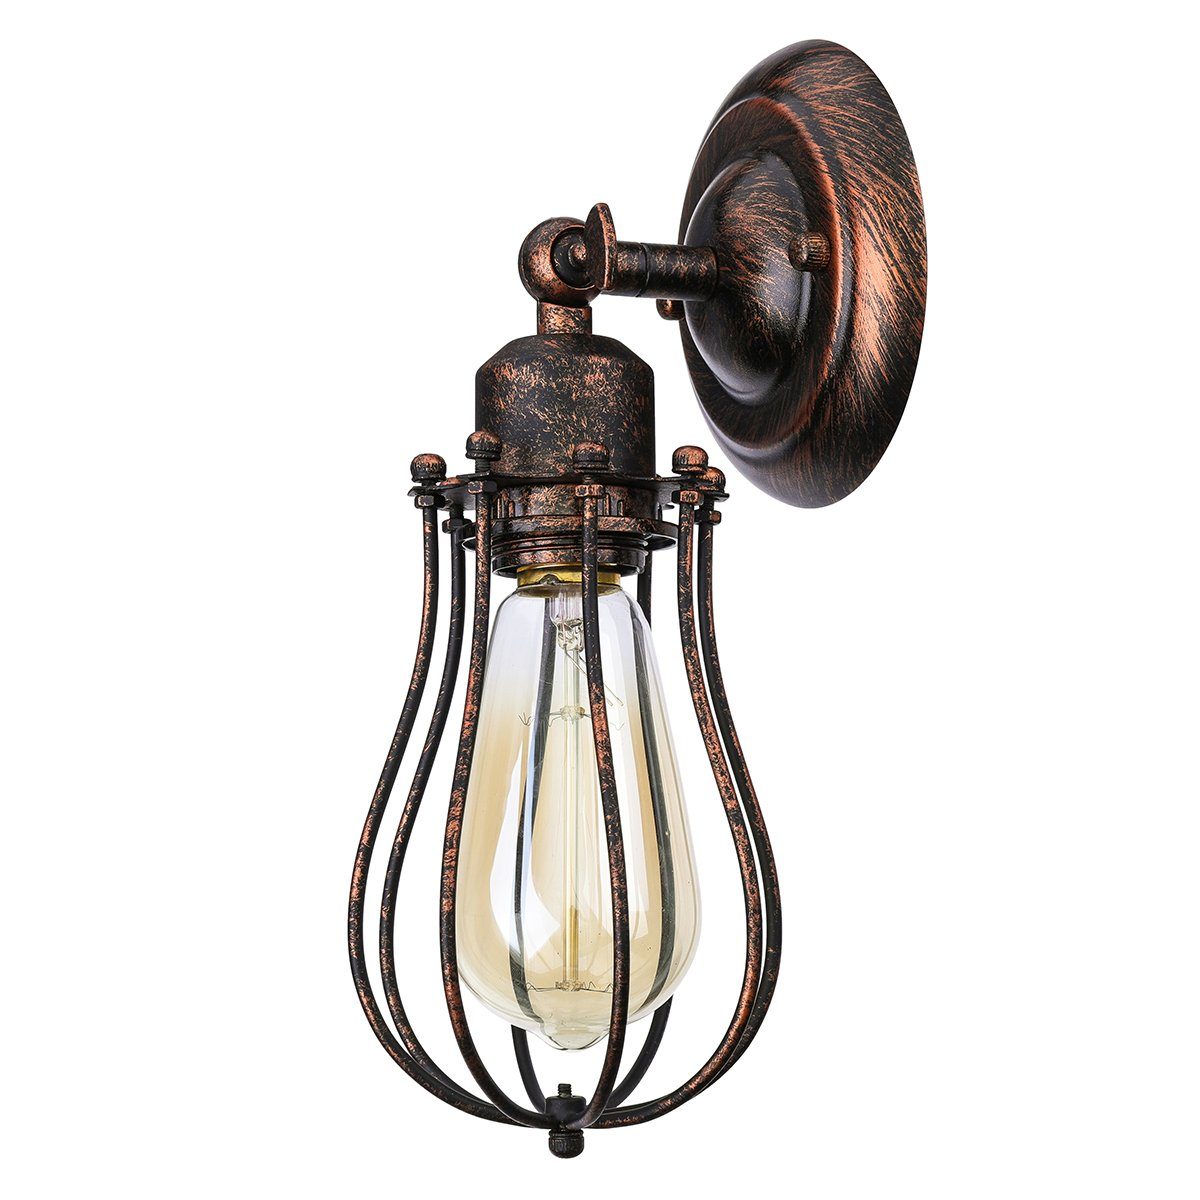 dekorativ, KingSo Vintage Wandleuchte integriert, besonders Lampen, ELEGIANT fest atmospärisch, beruhigendes LED industrielle ambiente